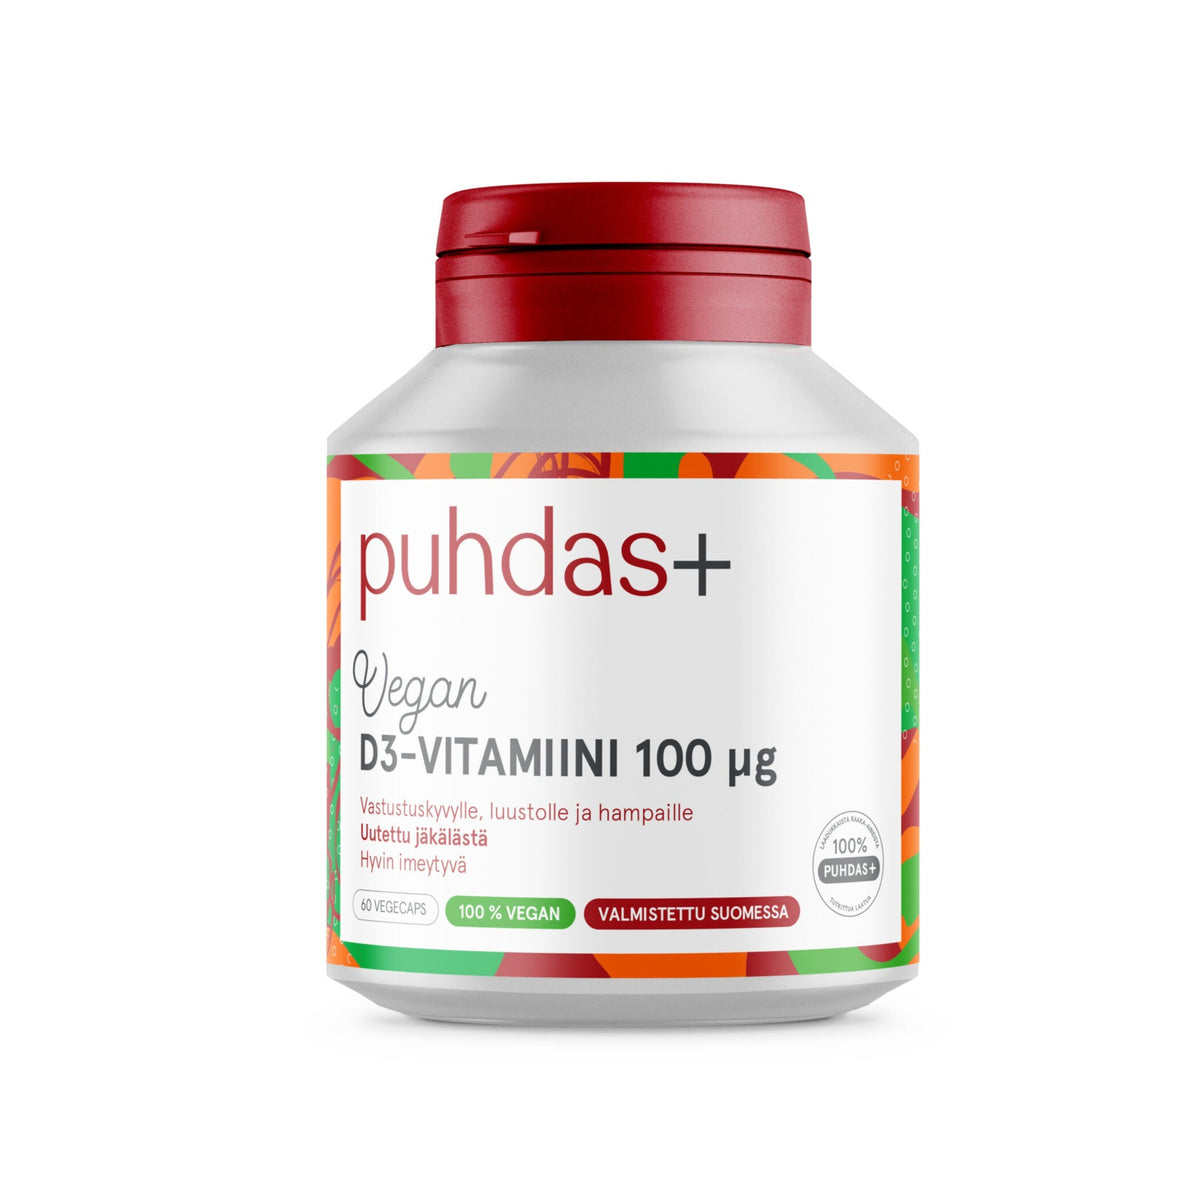 Puhdas+ Vegan D3-vitamiini 100 µg 60 kaps.